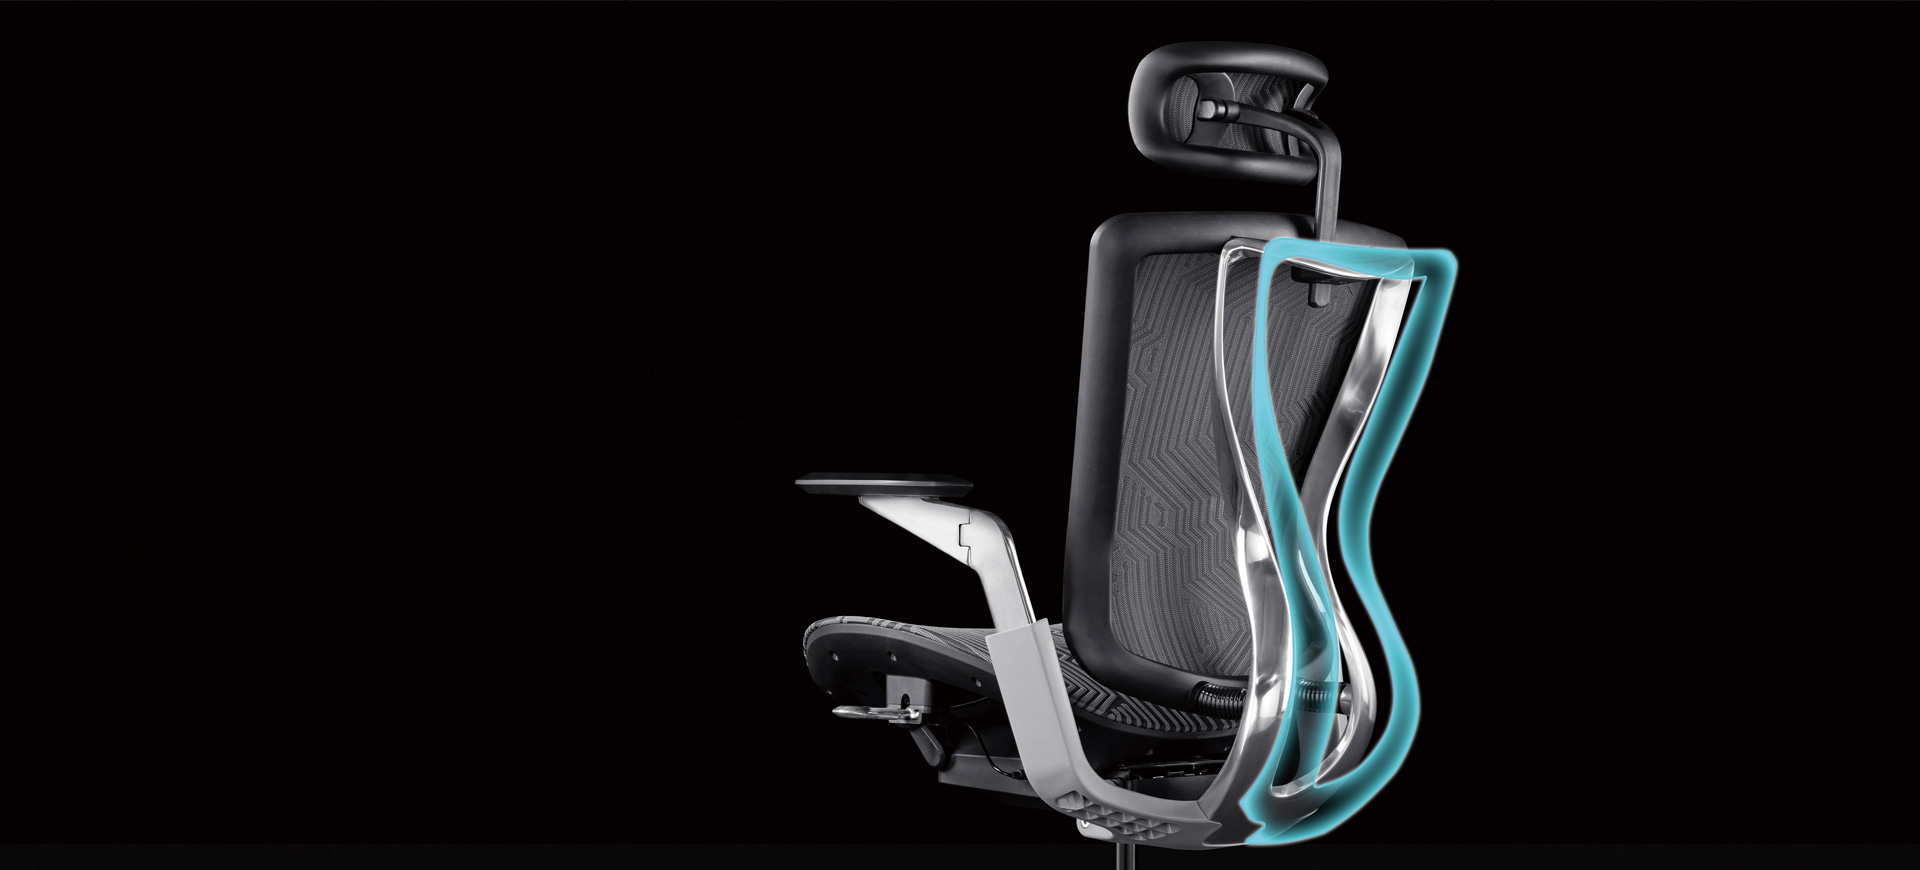 ergonomic chair,swivel office chair,office chair furniture